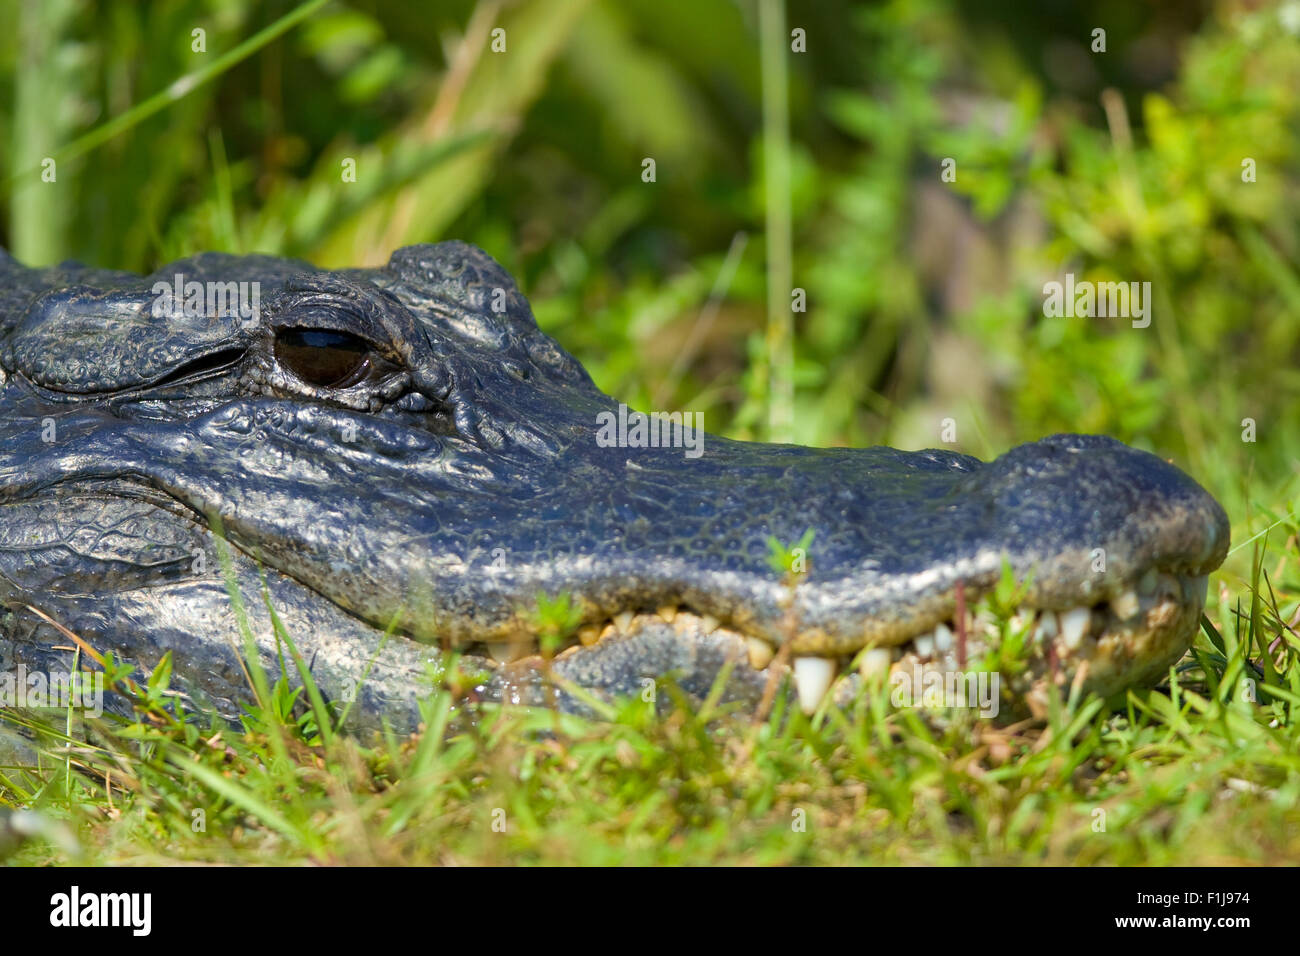 Close-up of eye of an alligator, Everglades National Park, Florida, USA Stock Photo